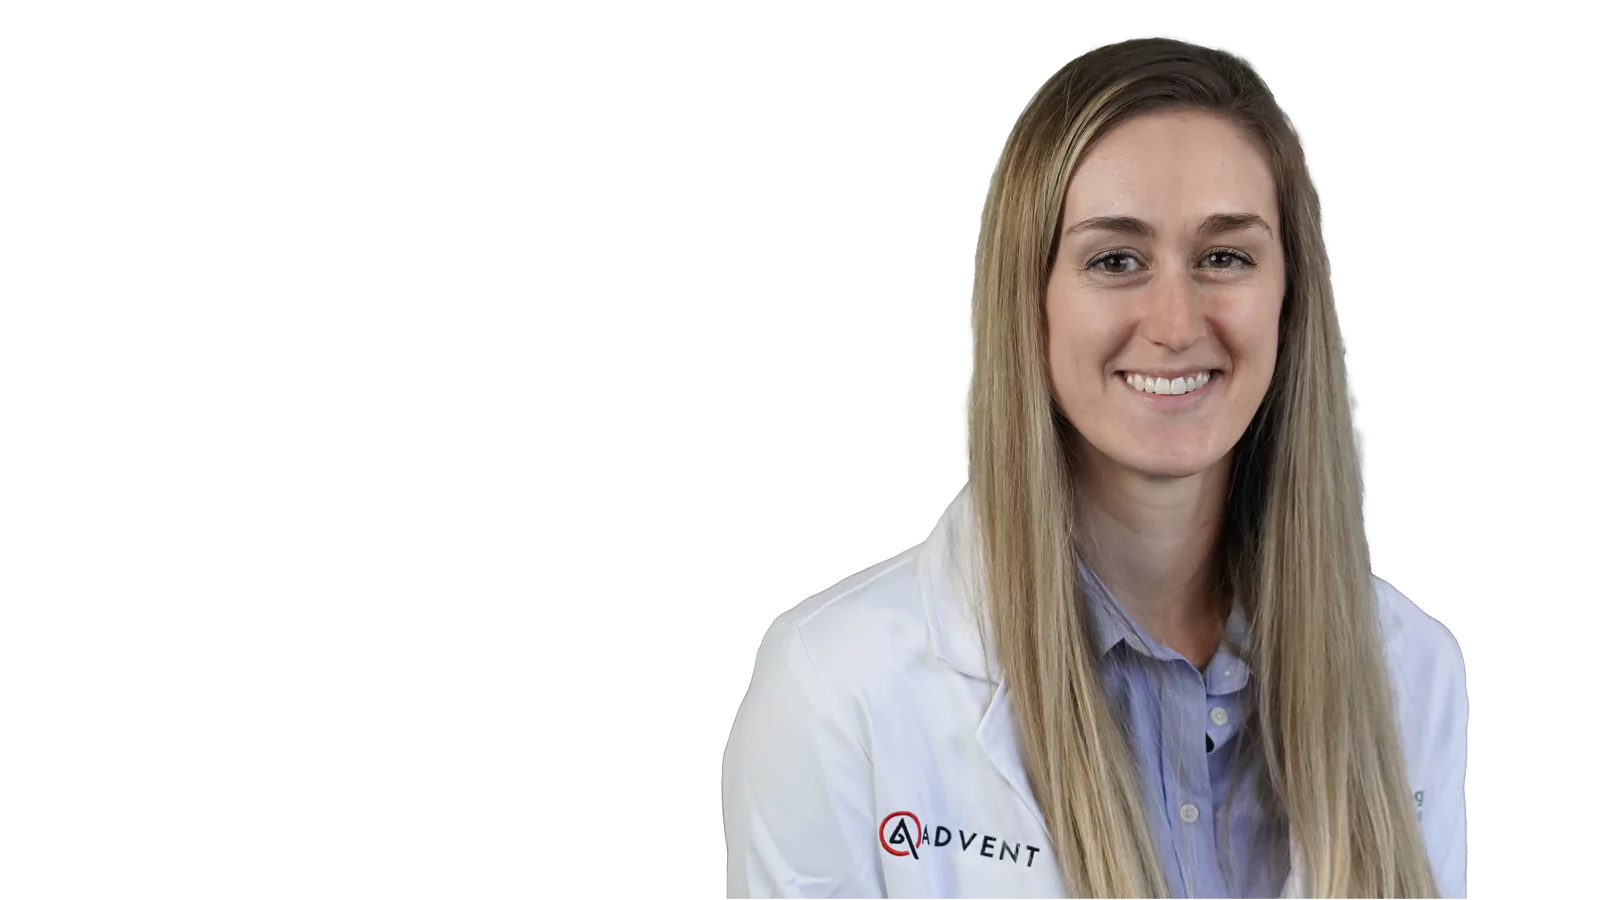 ADVENT Provider - Physician Assistant - Katy Dahlinger